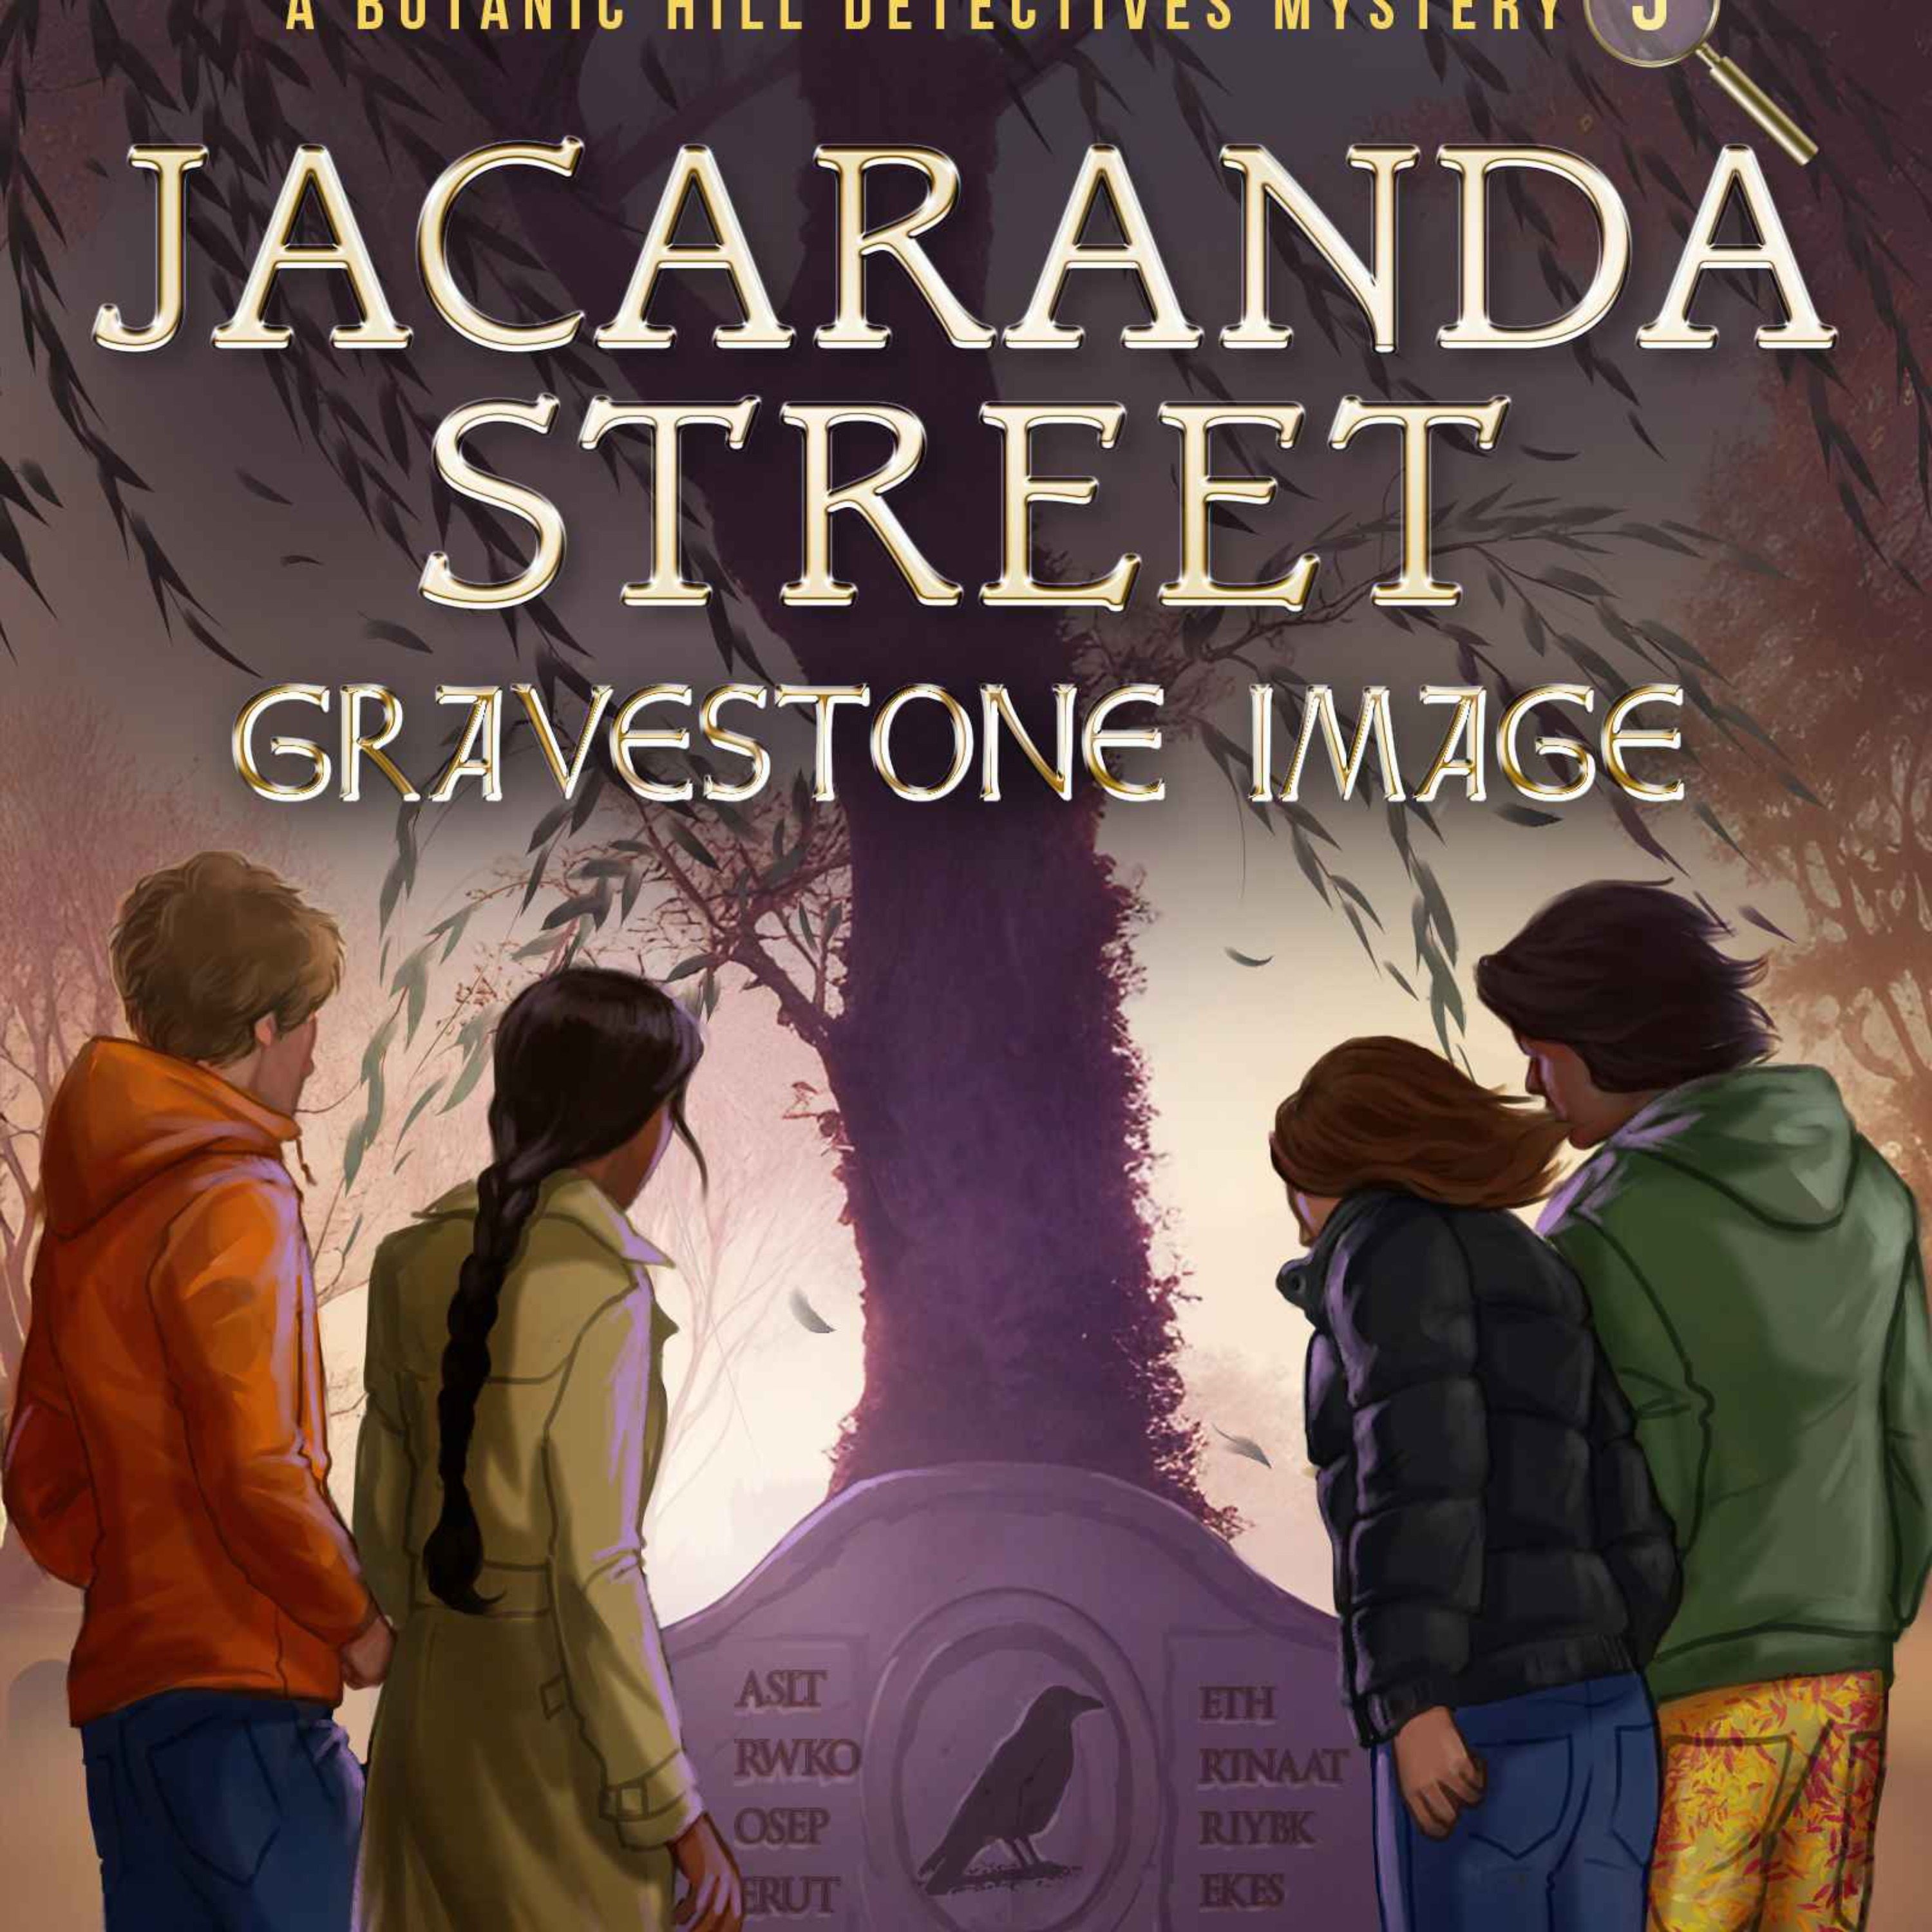 Sherrill Joseph - Jacaranda Street: Gravestone Image (The Botanic Hill Detectives Mysteries)